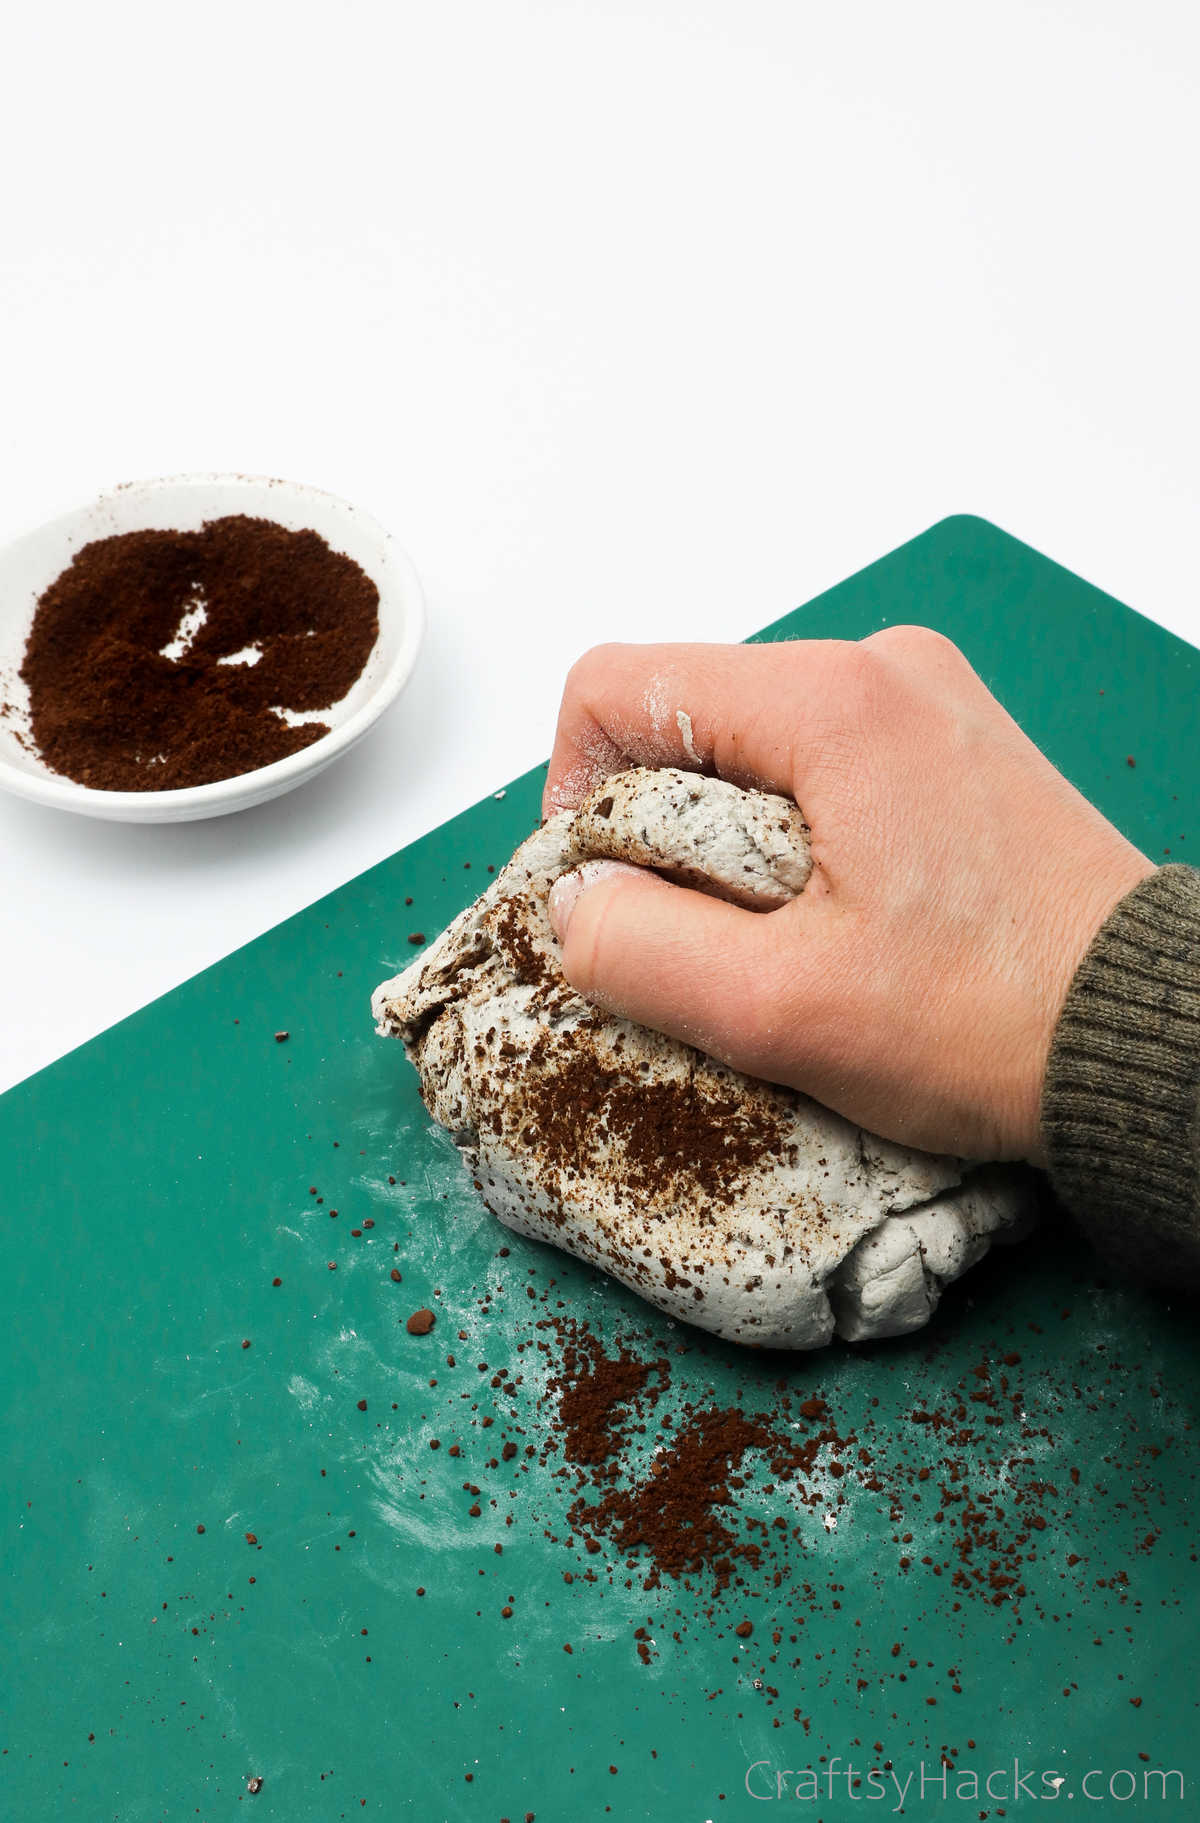 kneading coffee into clay